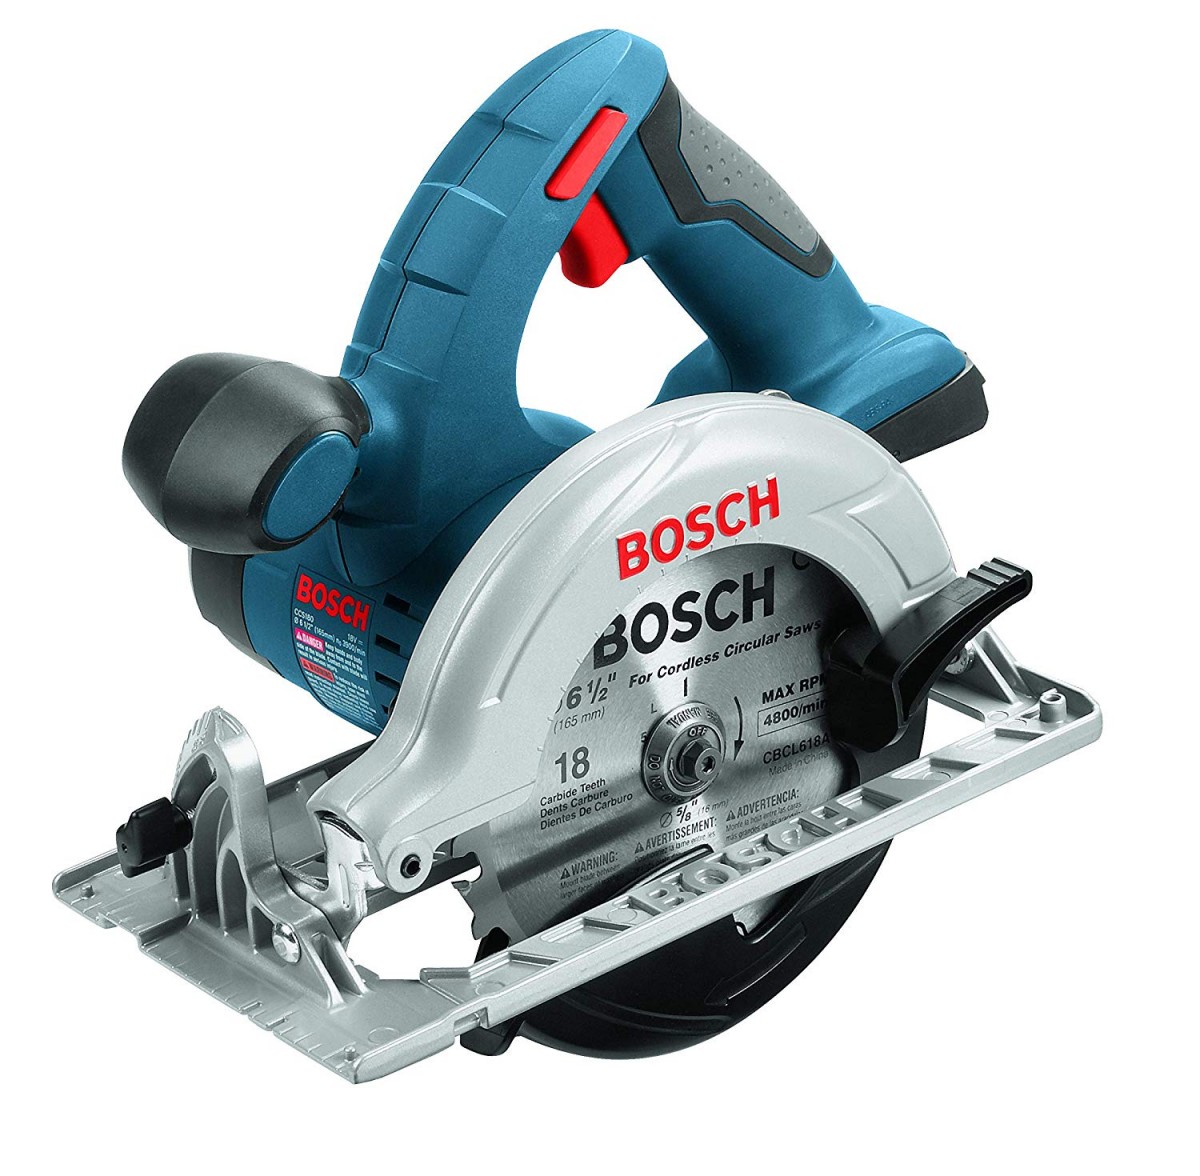 Bosch CCS180 Review